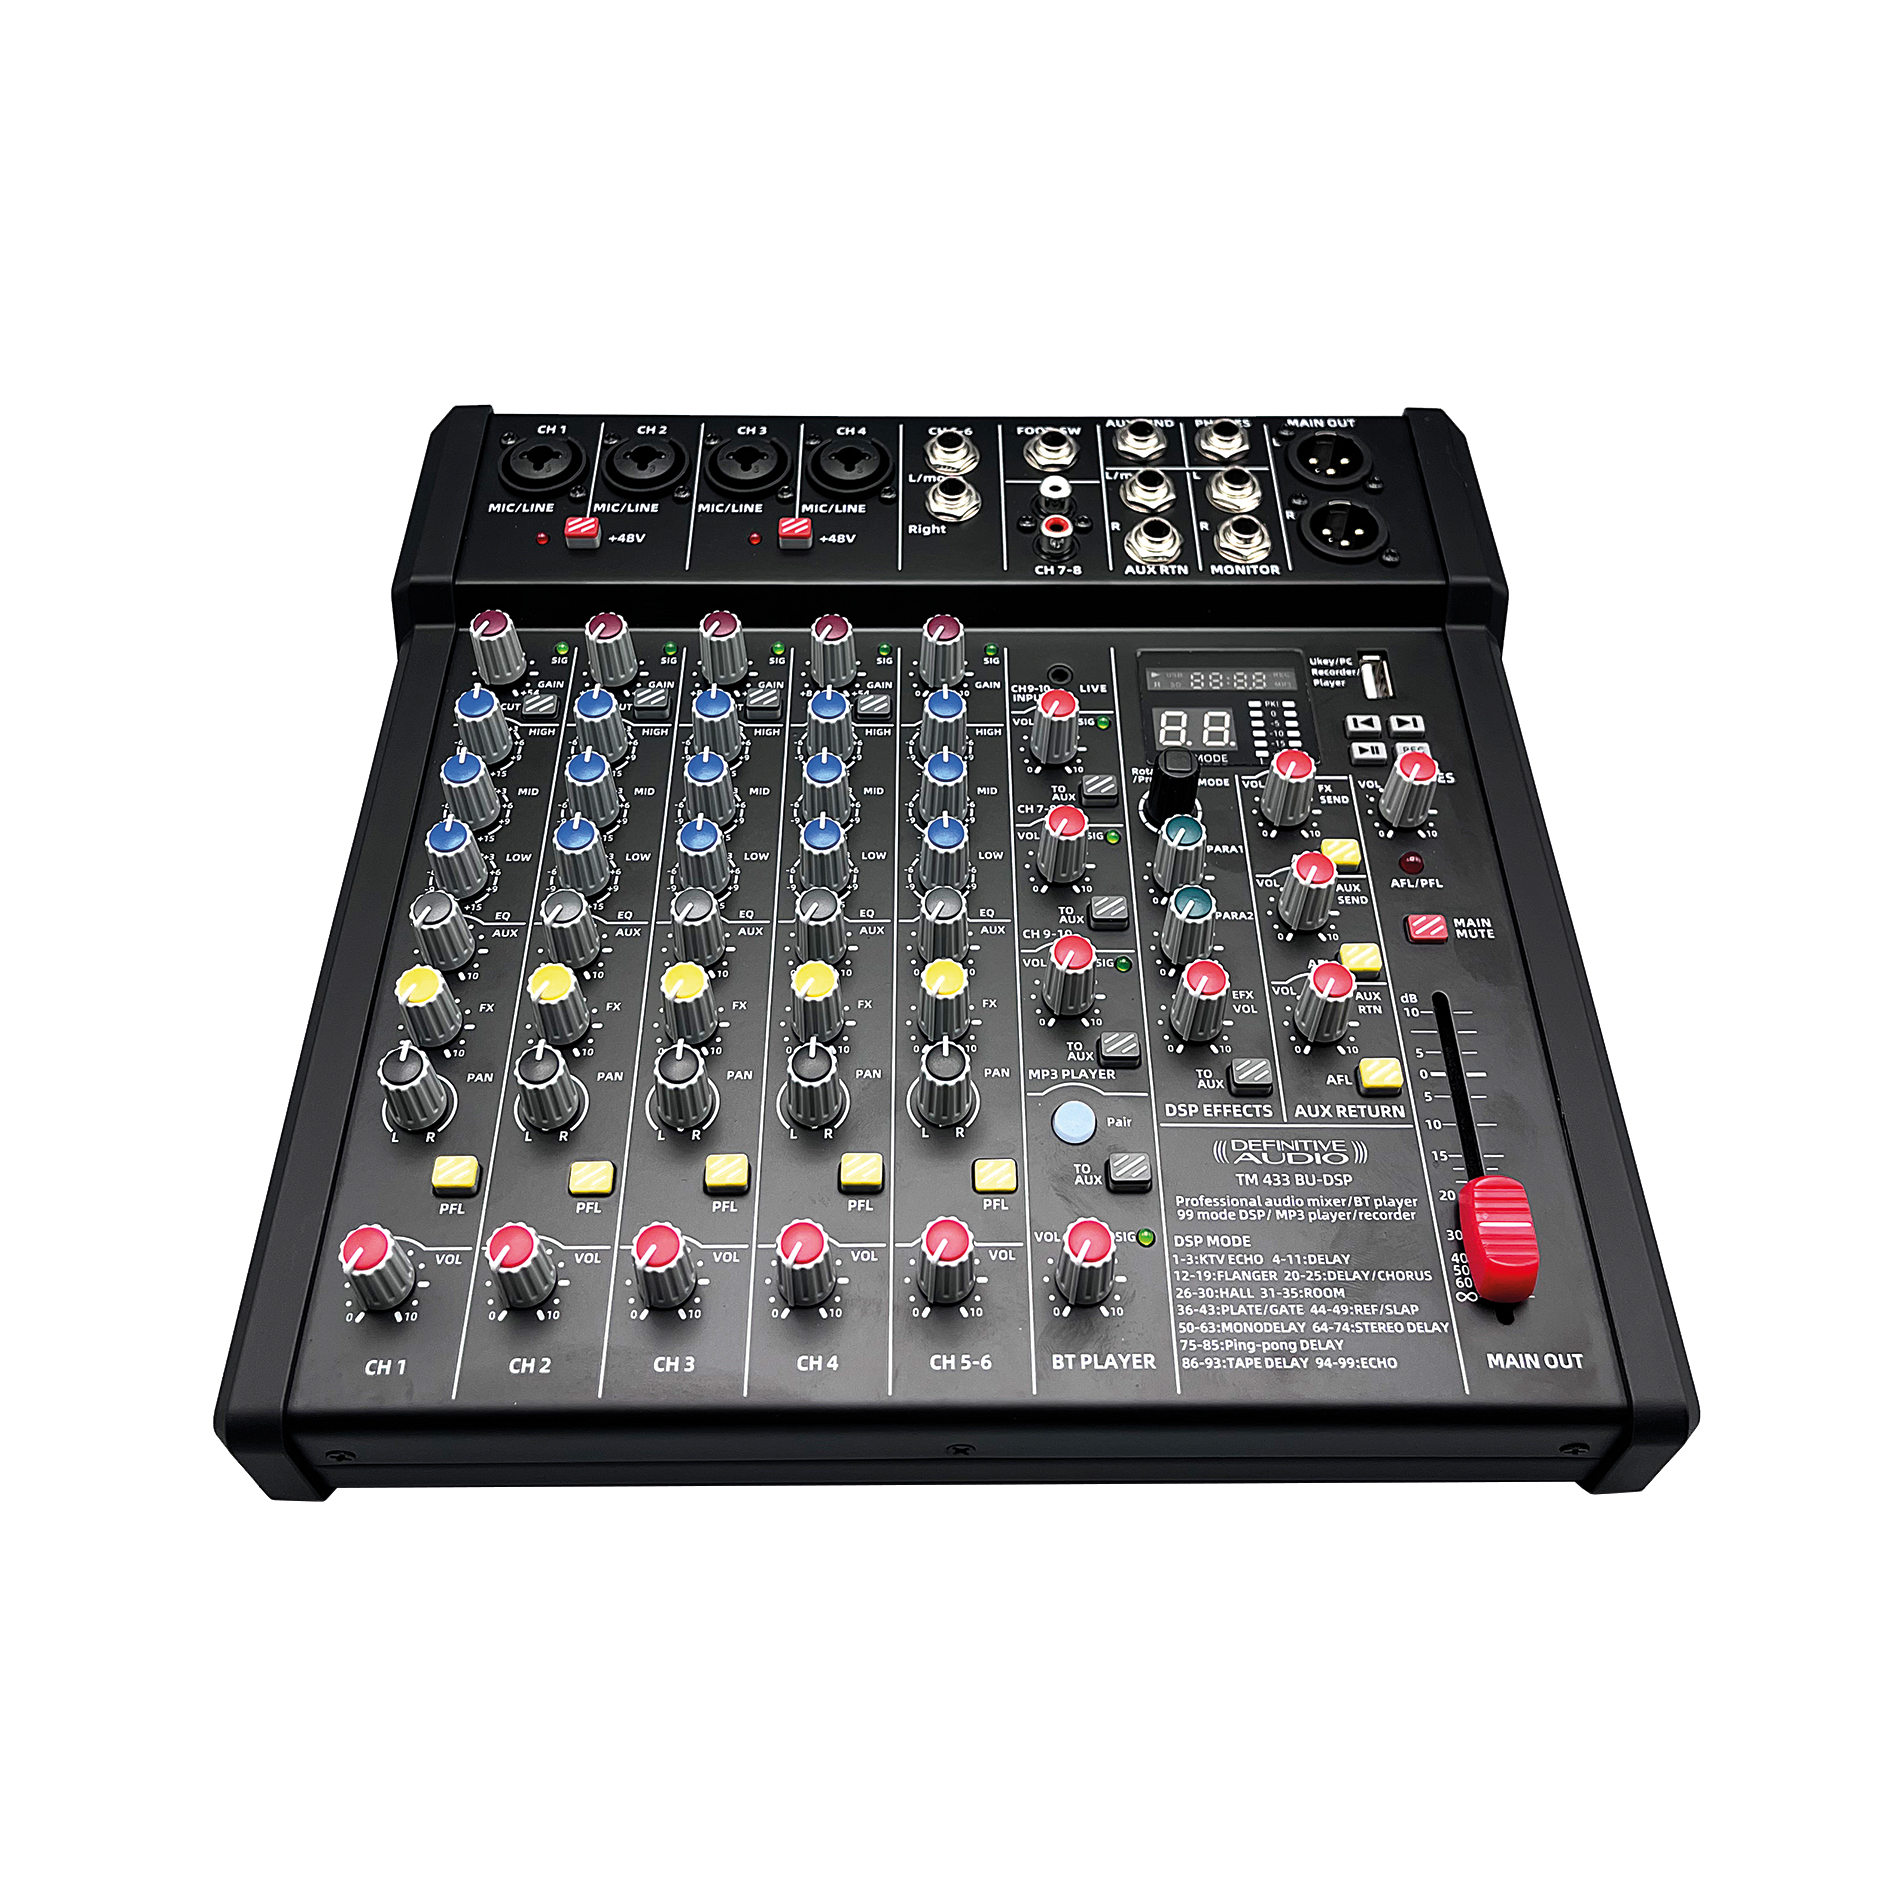 Definitive Audio Tm 433 Bu-dsp - Analog mixing desk - Variation 5